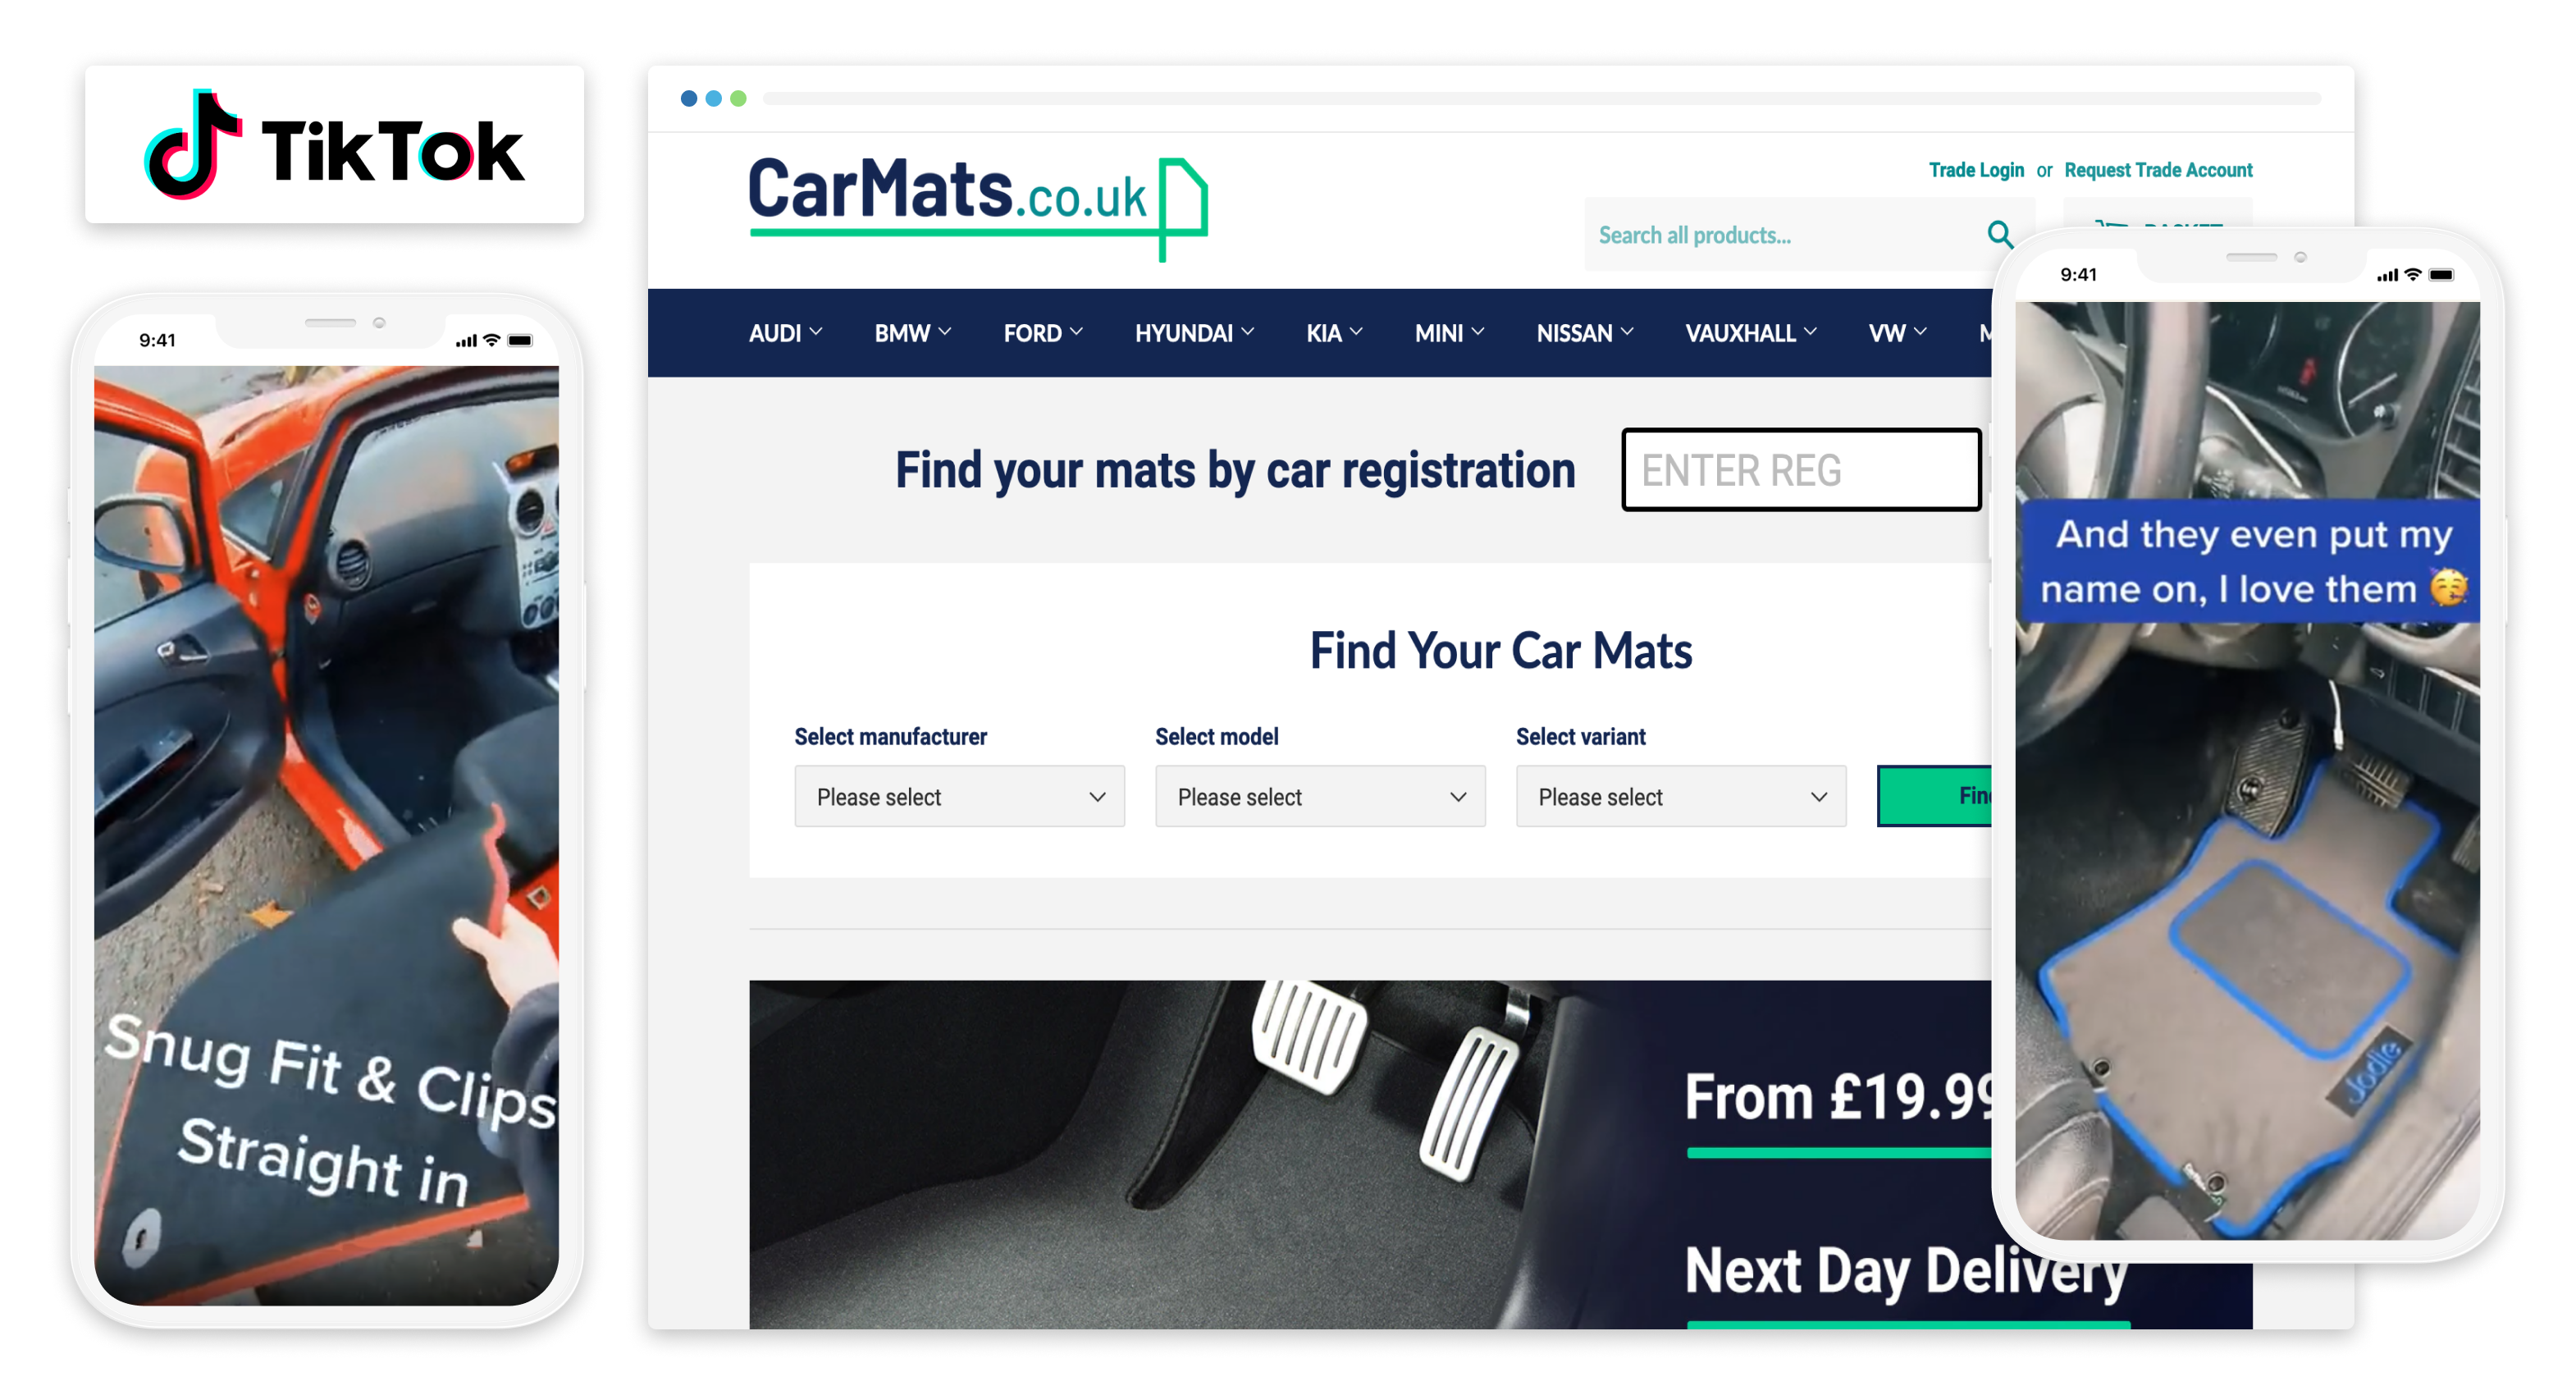 Carmats.co.uk TikTok Campaign